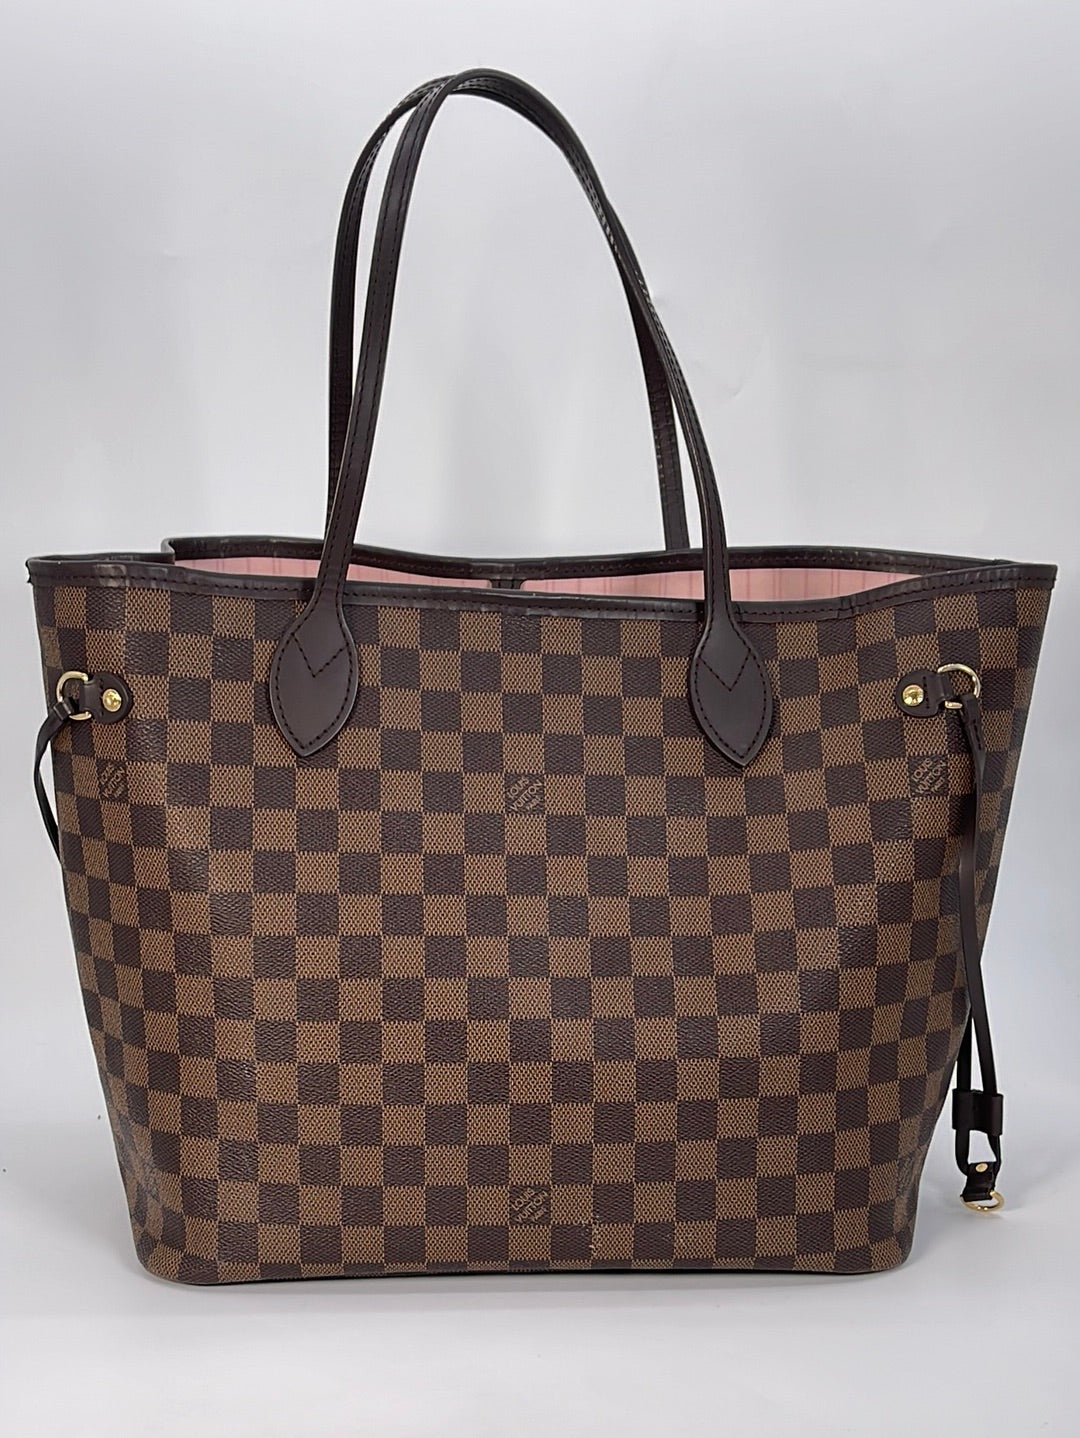 Preloved Louis Vuitton Damier Azur Neverfull MM Tote Bag AR1186 062023 –  KimmieBBags LLC